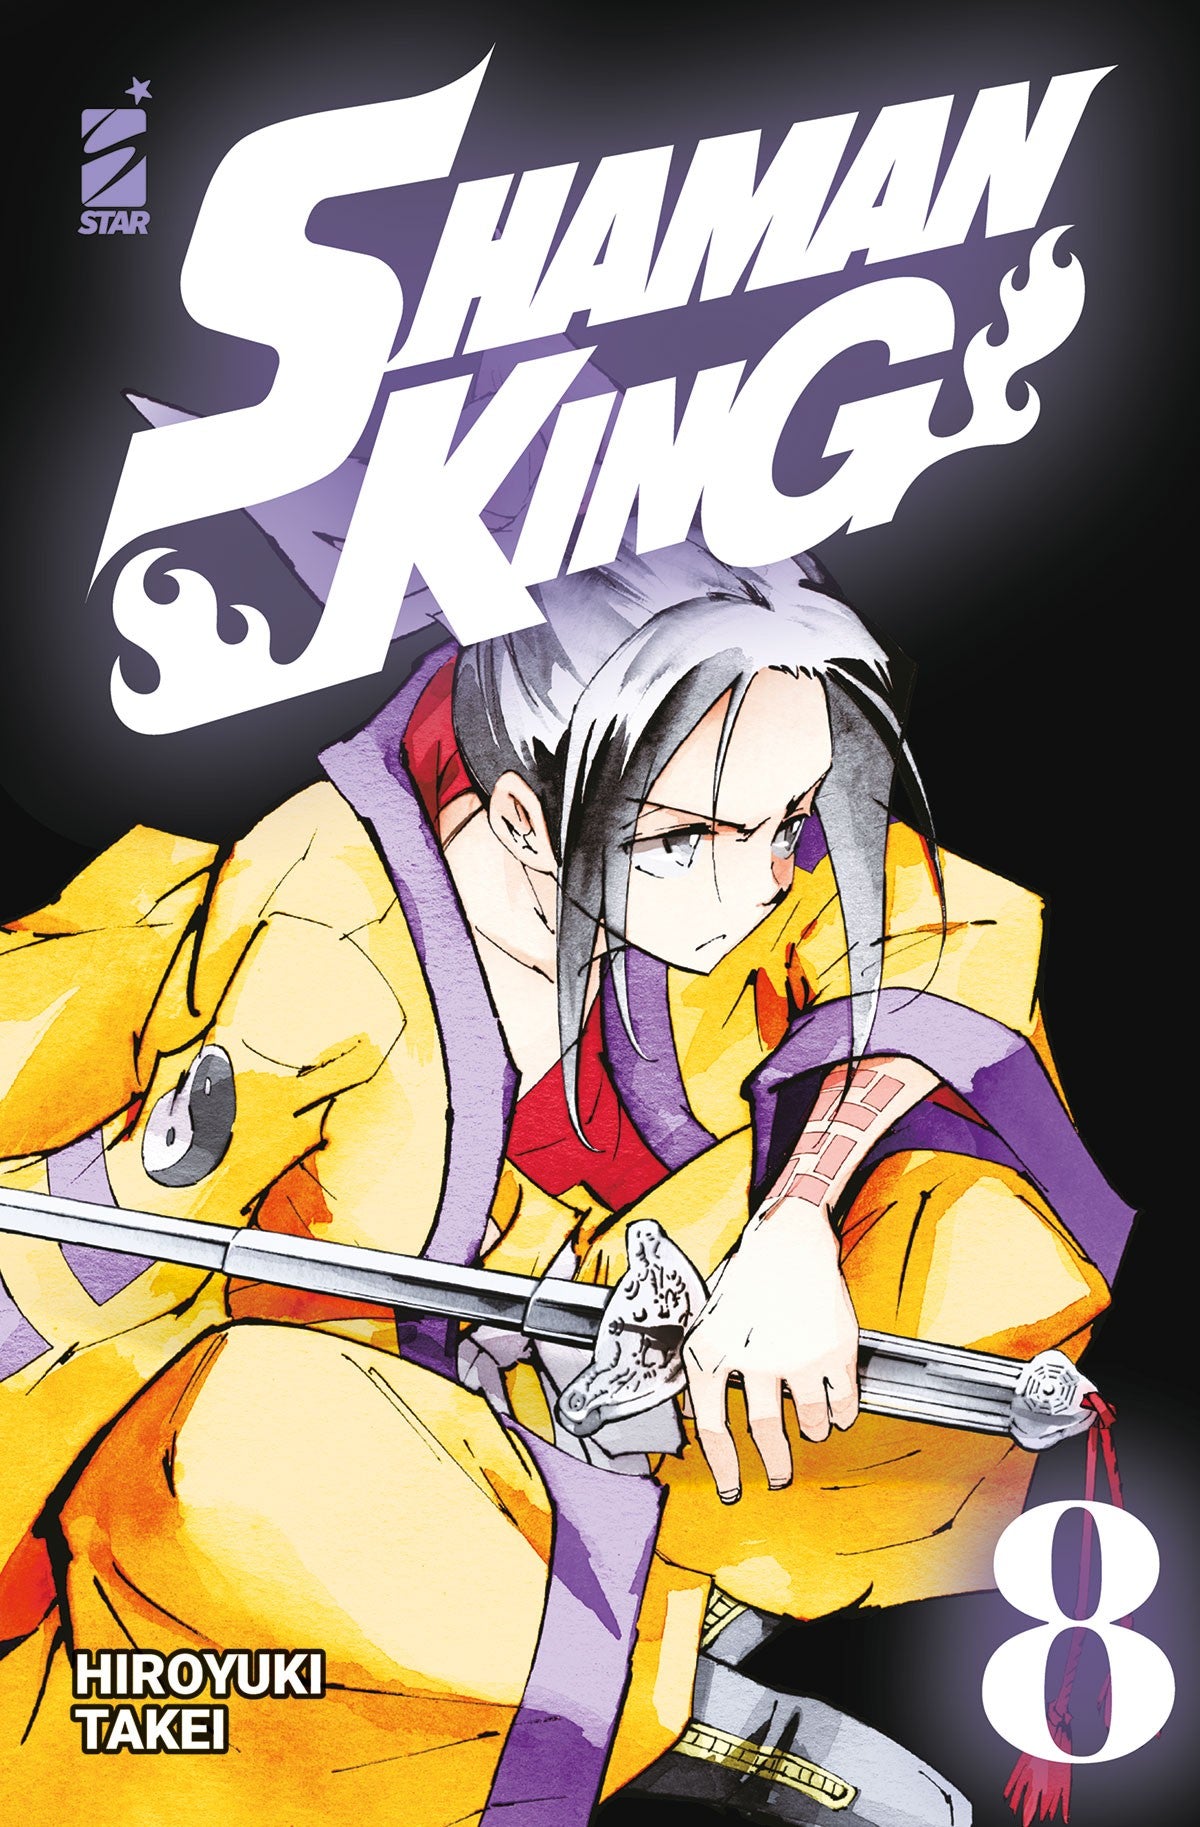 Shaman King Final Edition 8